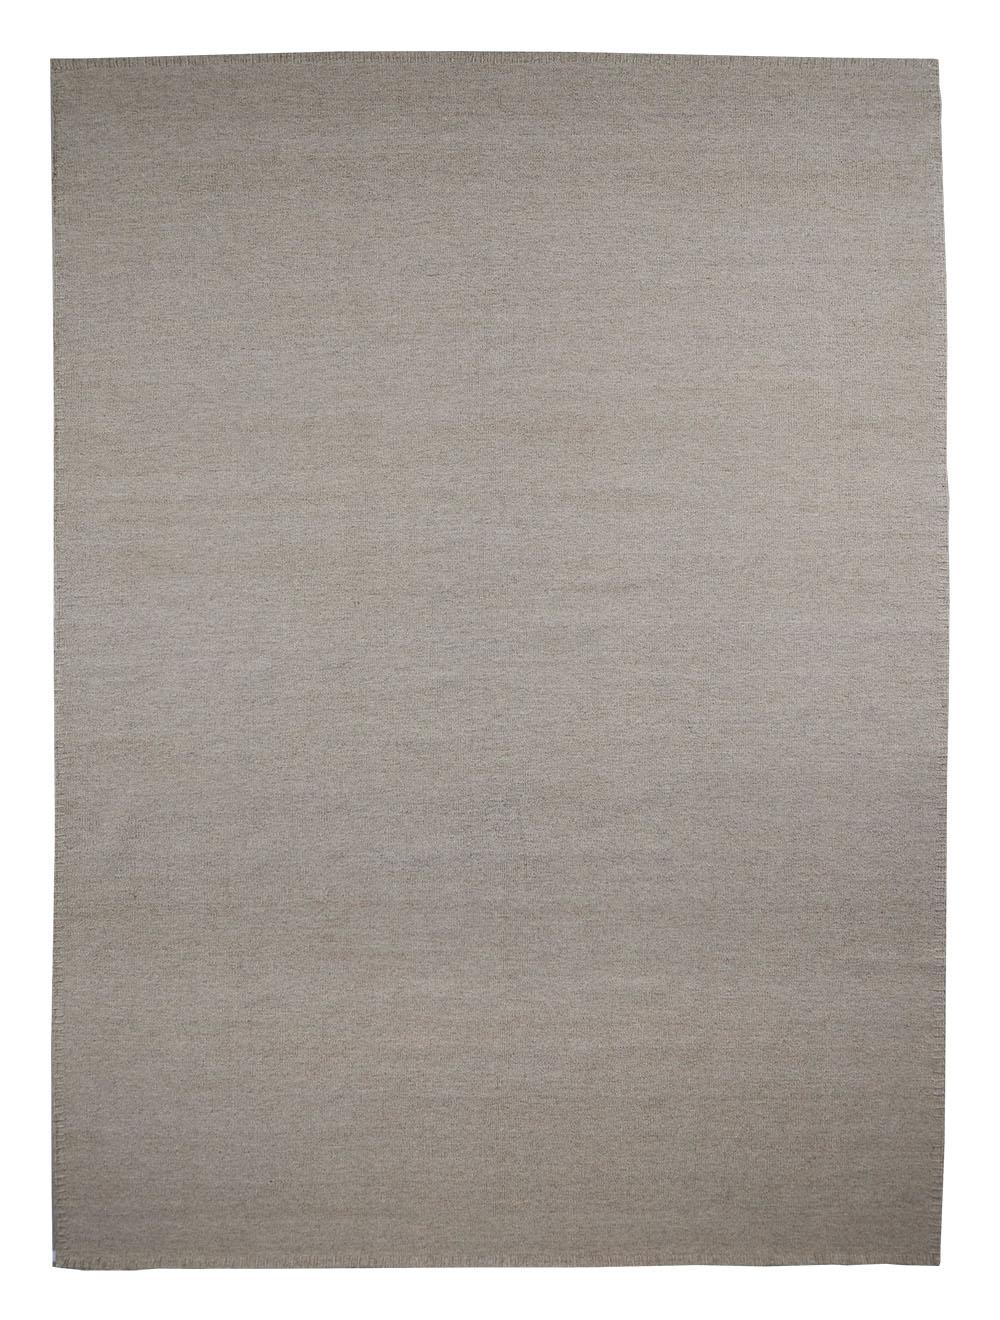 Wool Light Beige with Stitches Escape Kelim Carpet by Massimo Copenhagen For Sale